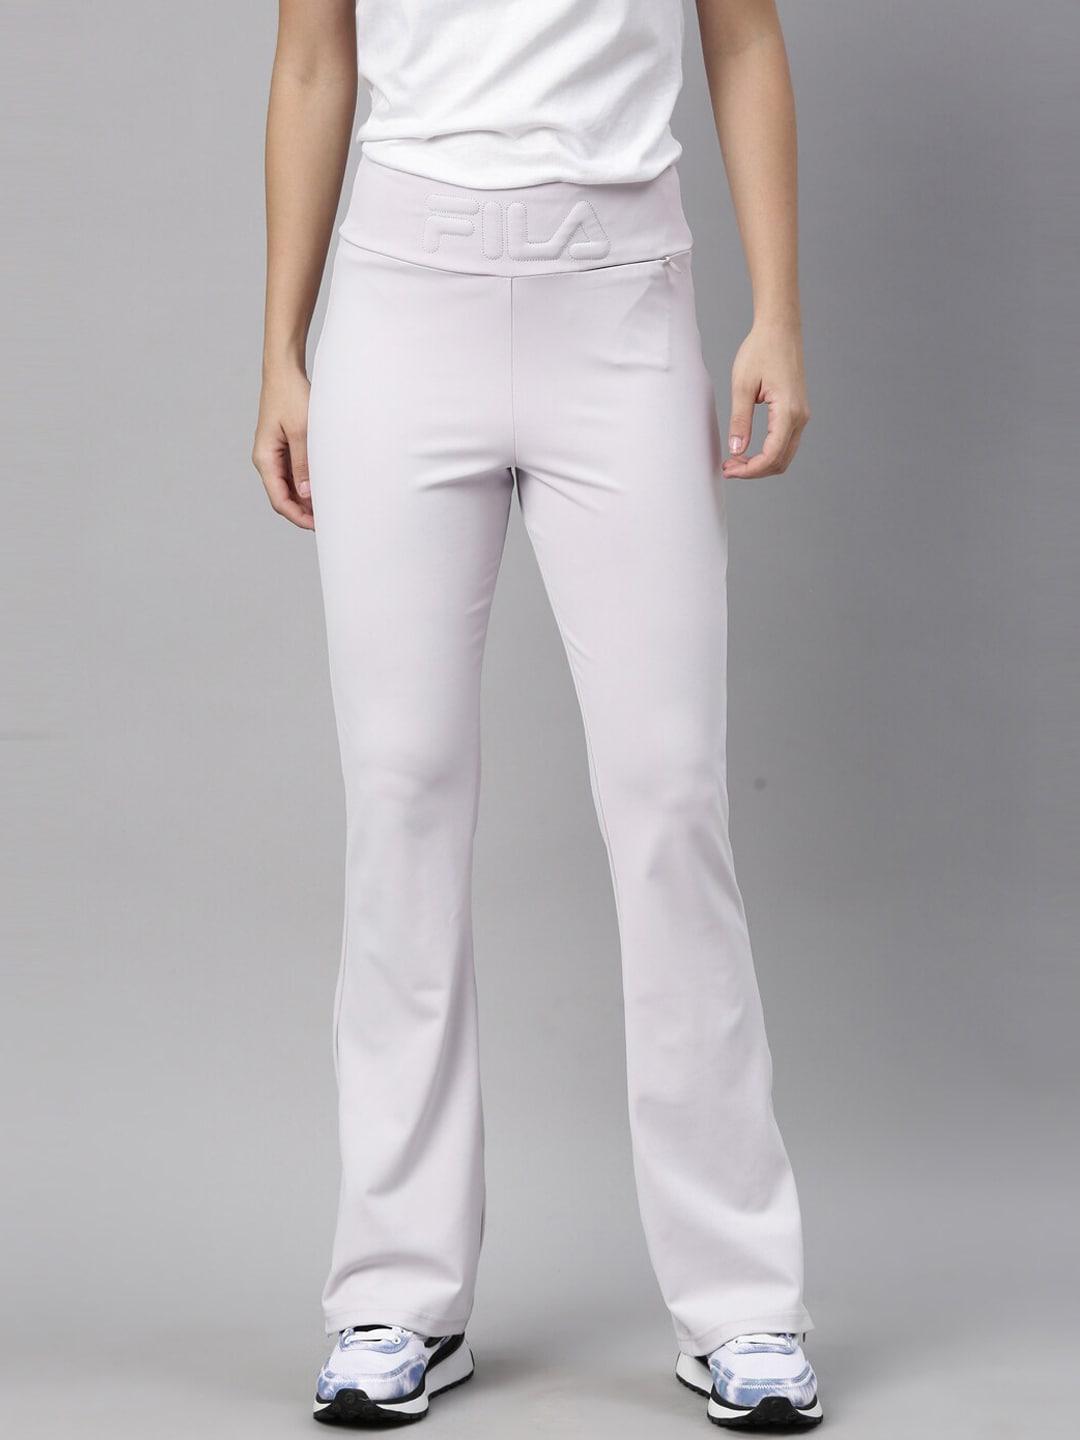 FILA Women White Solid Track Pants